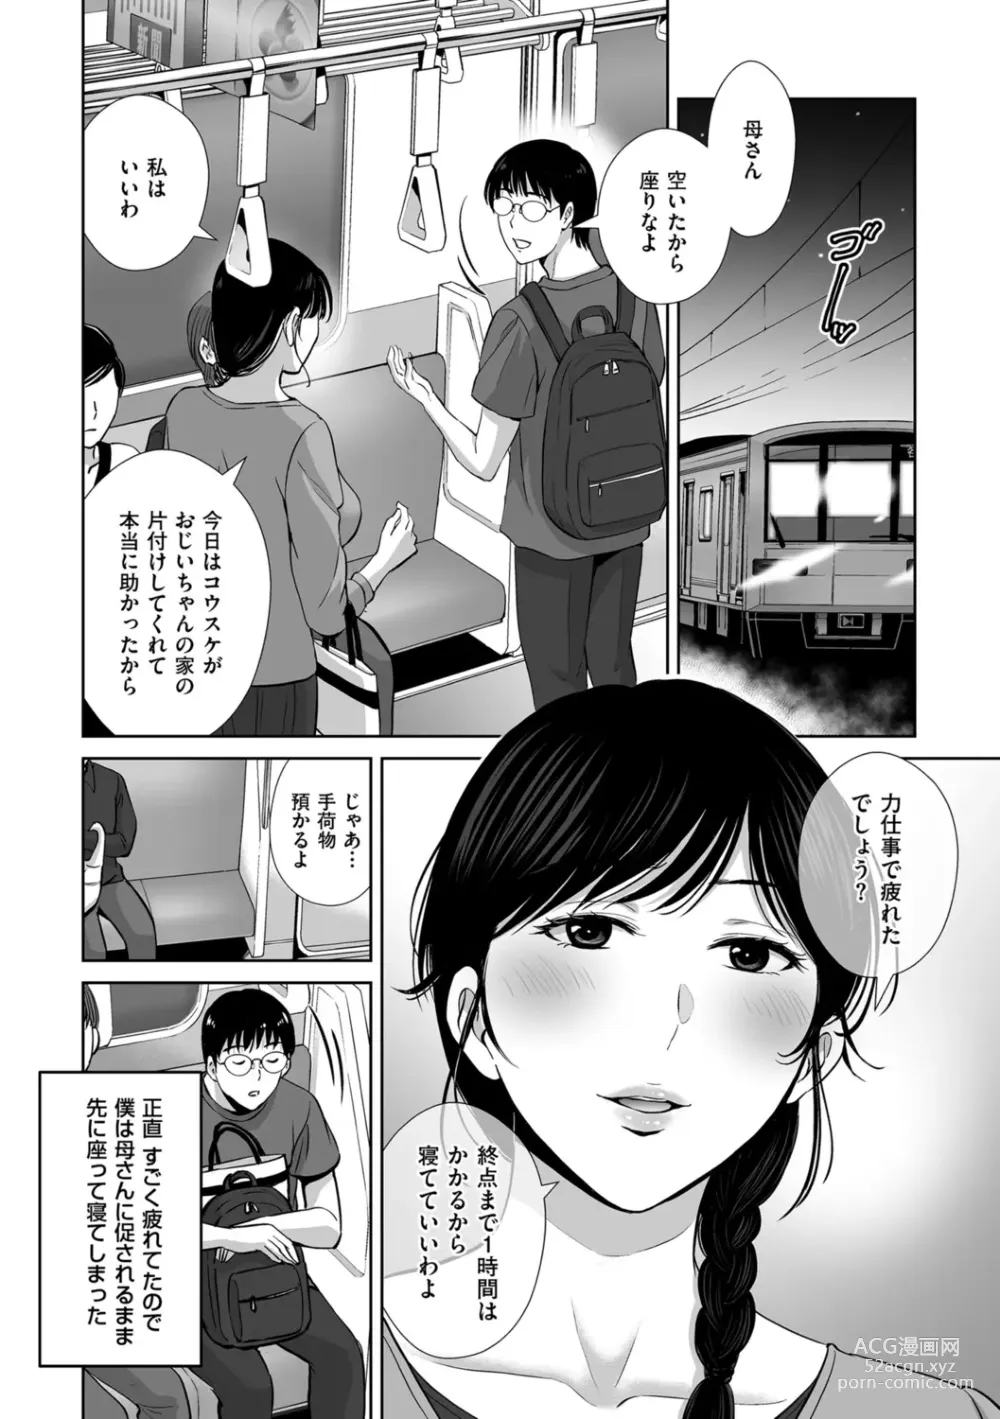 Page 4 of manga Mesuzakari no Haha-tachi e